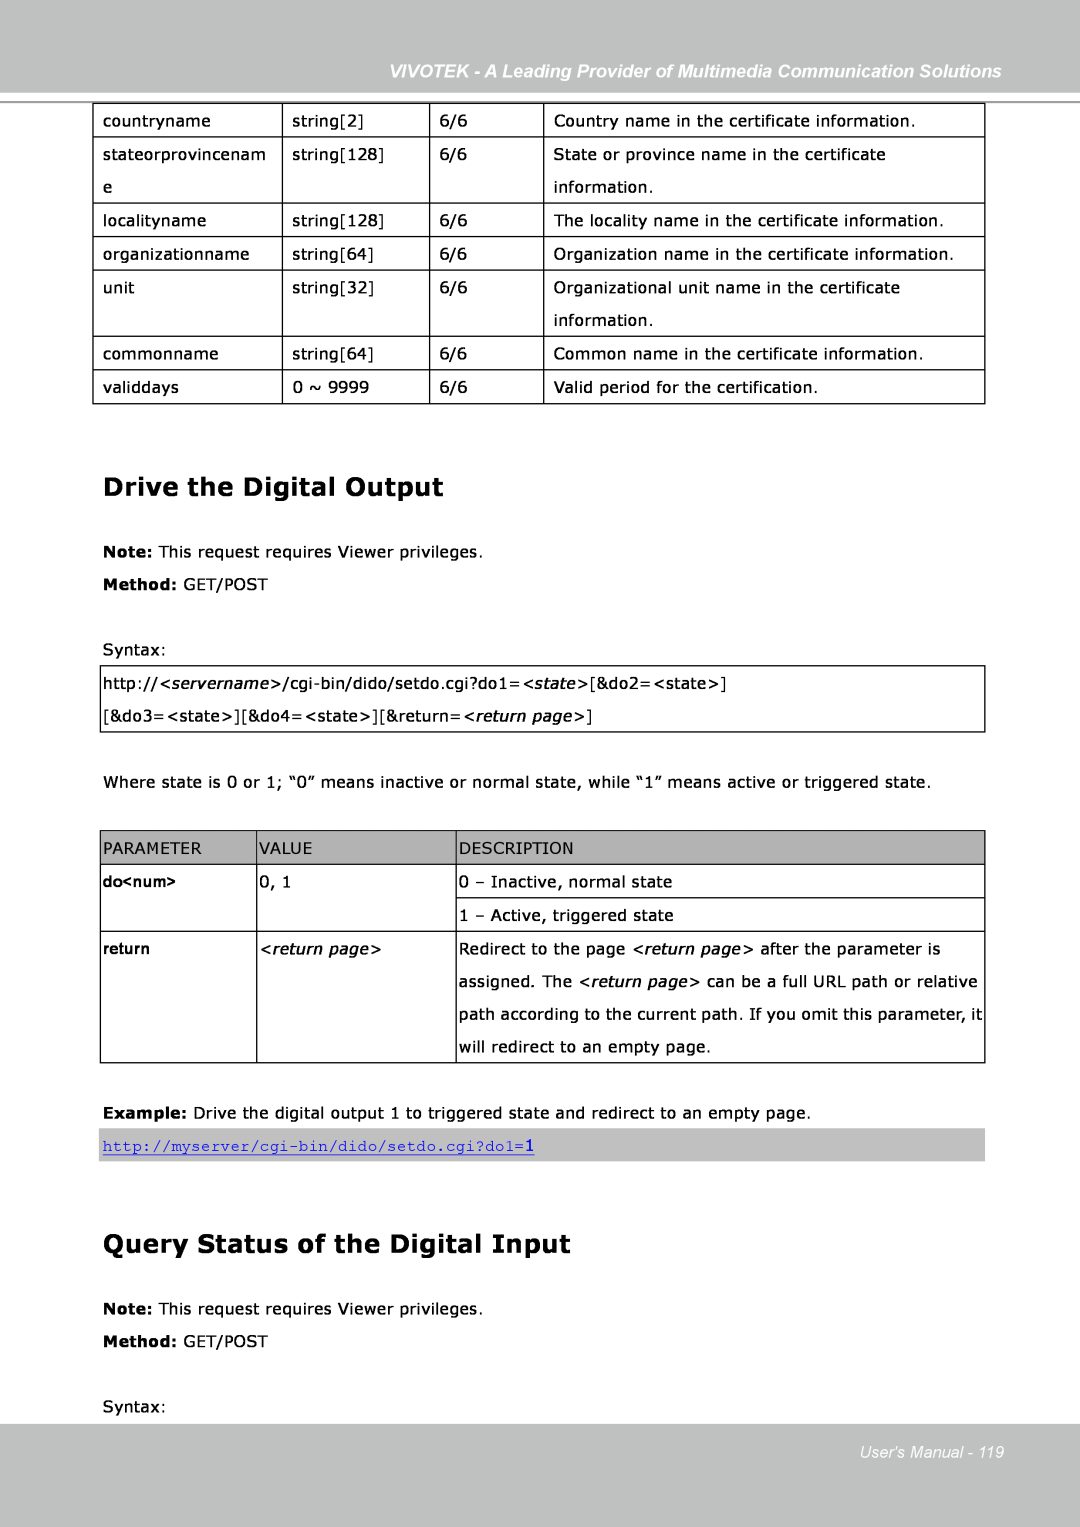 Vivotek FD7141(V) manual Drive the Digital Output, Query Status of the Digital Input, Method: GET/POST, do num, return 